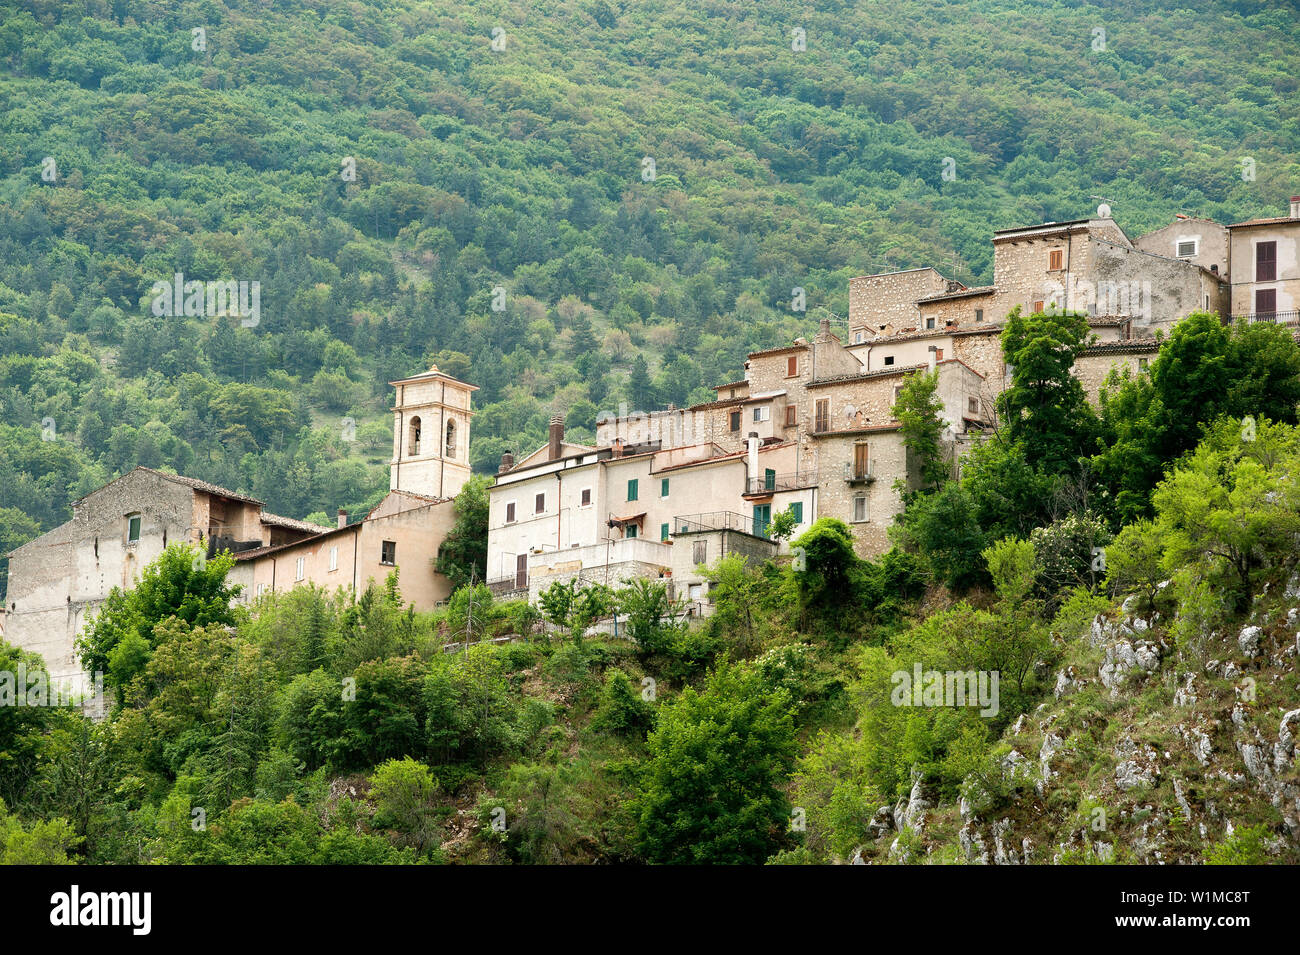 The old mountain village of Villalago high above Lake Scanno Stock Photo